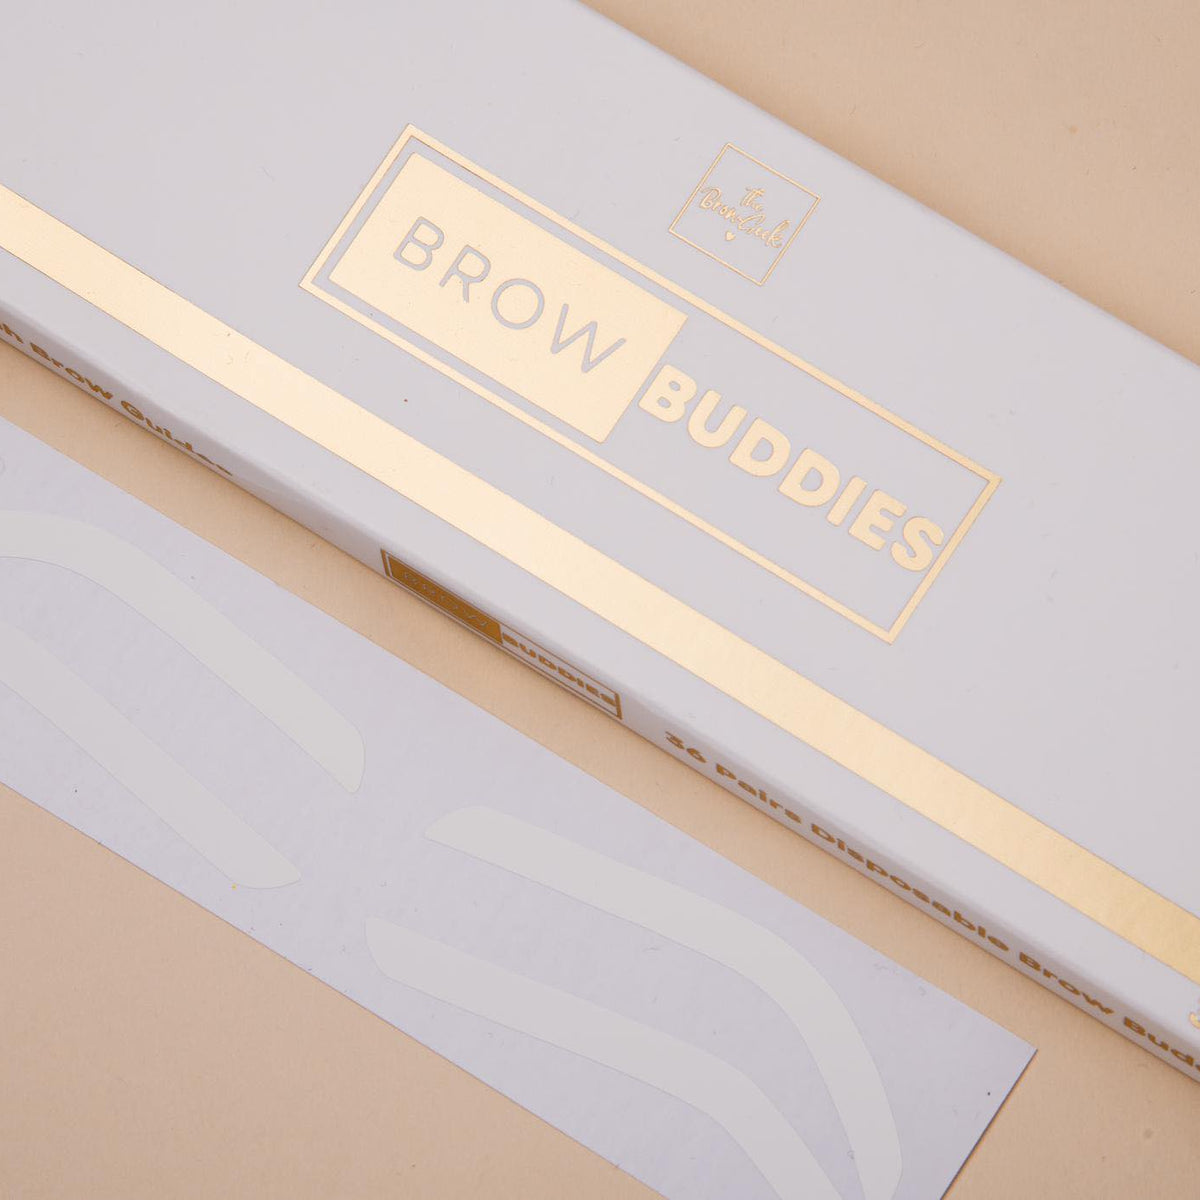 Brow Buddies (Eyebrow shaping tool)